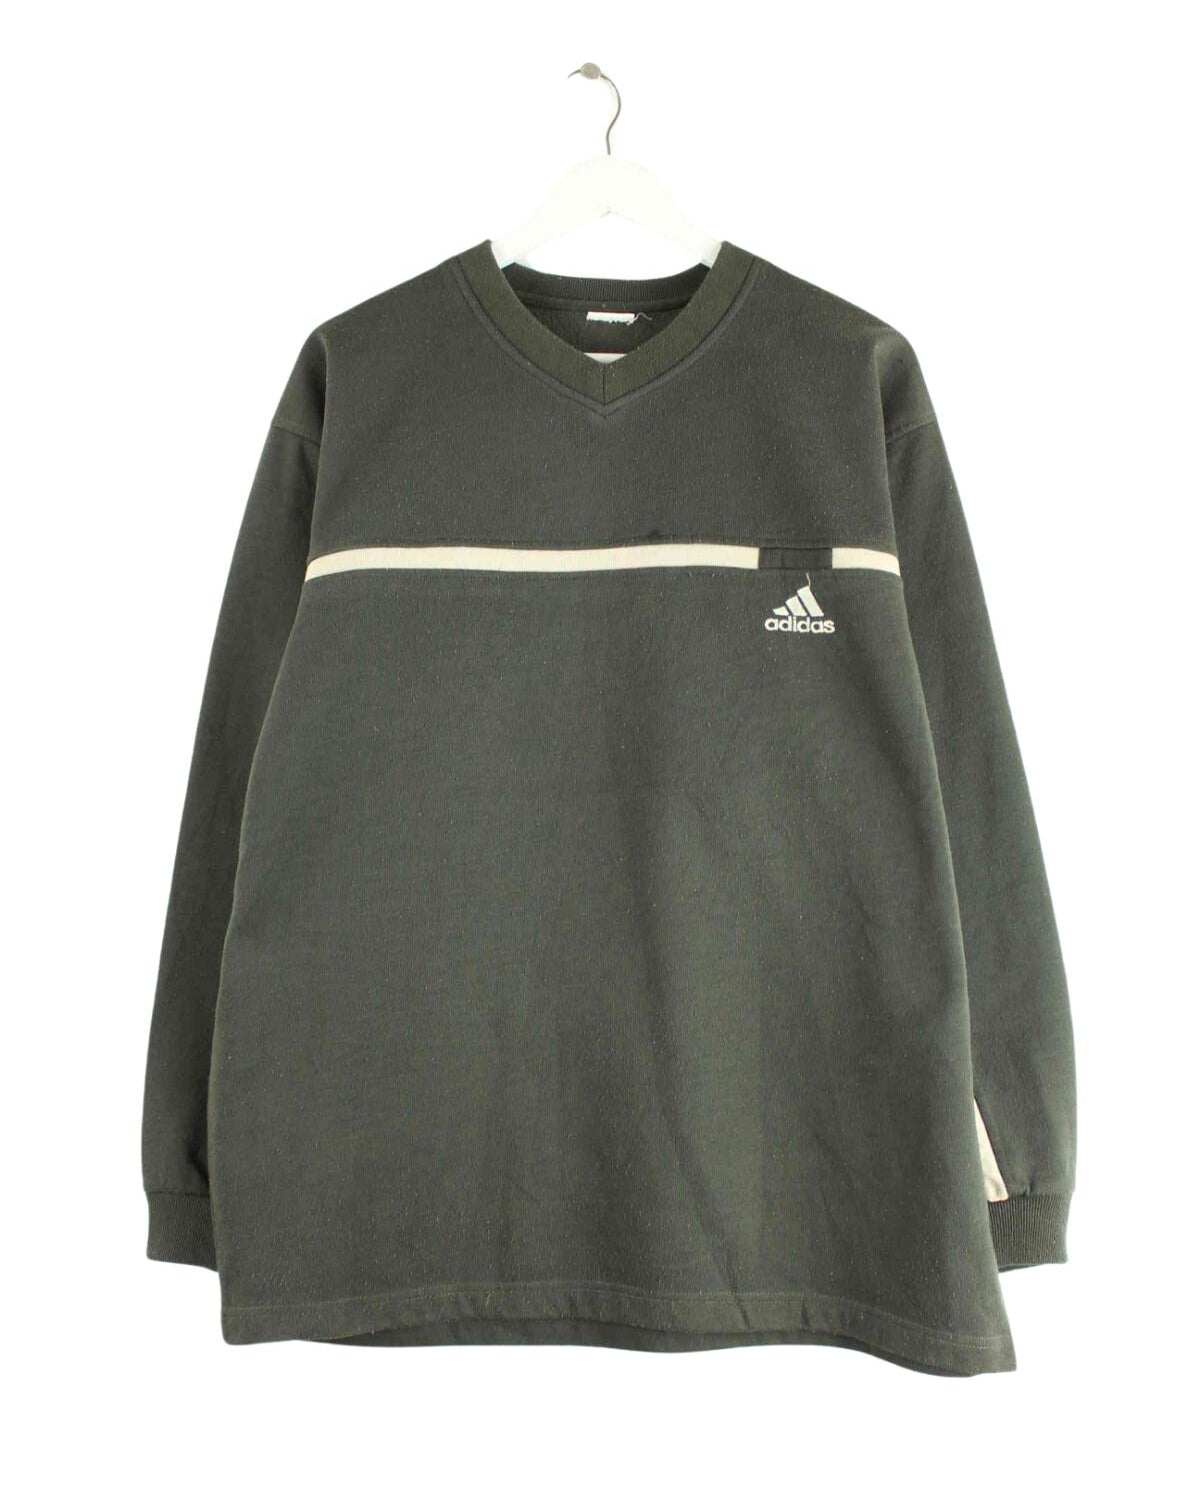 Adidas 90s Vintage Performance V-Neck Sweater Grün L (front image)